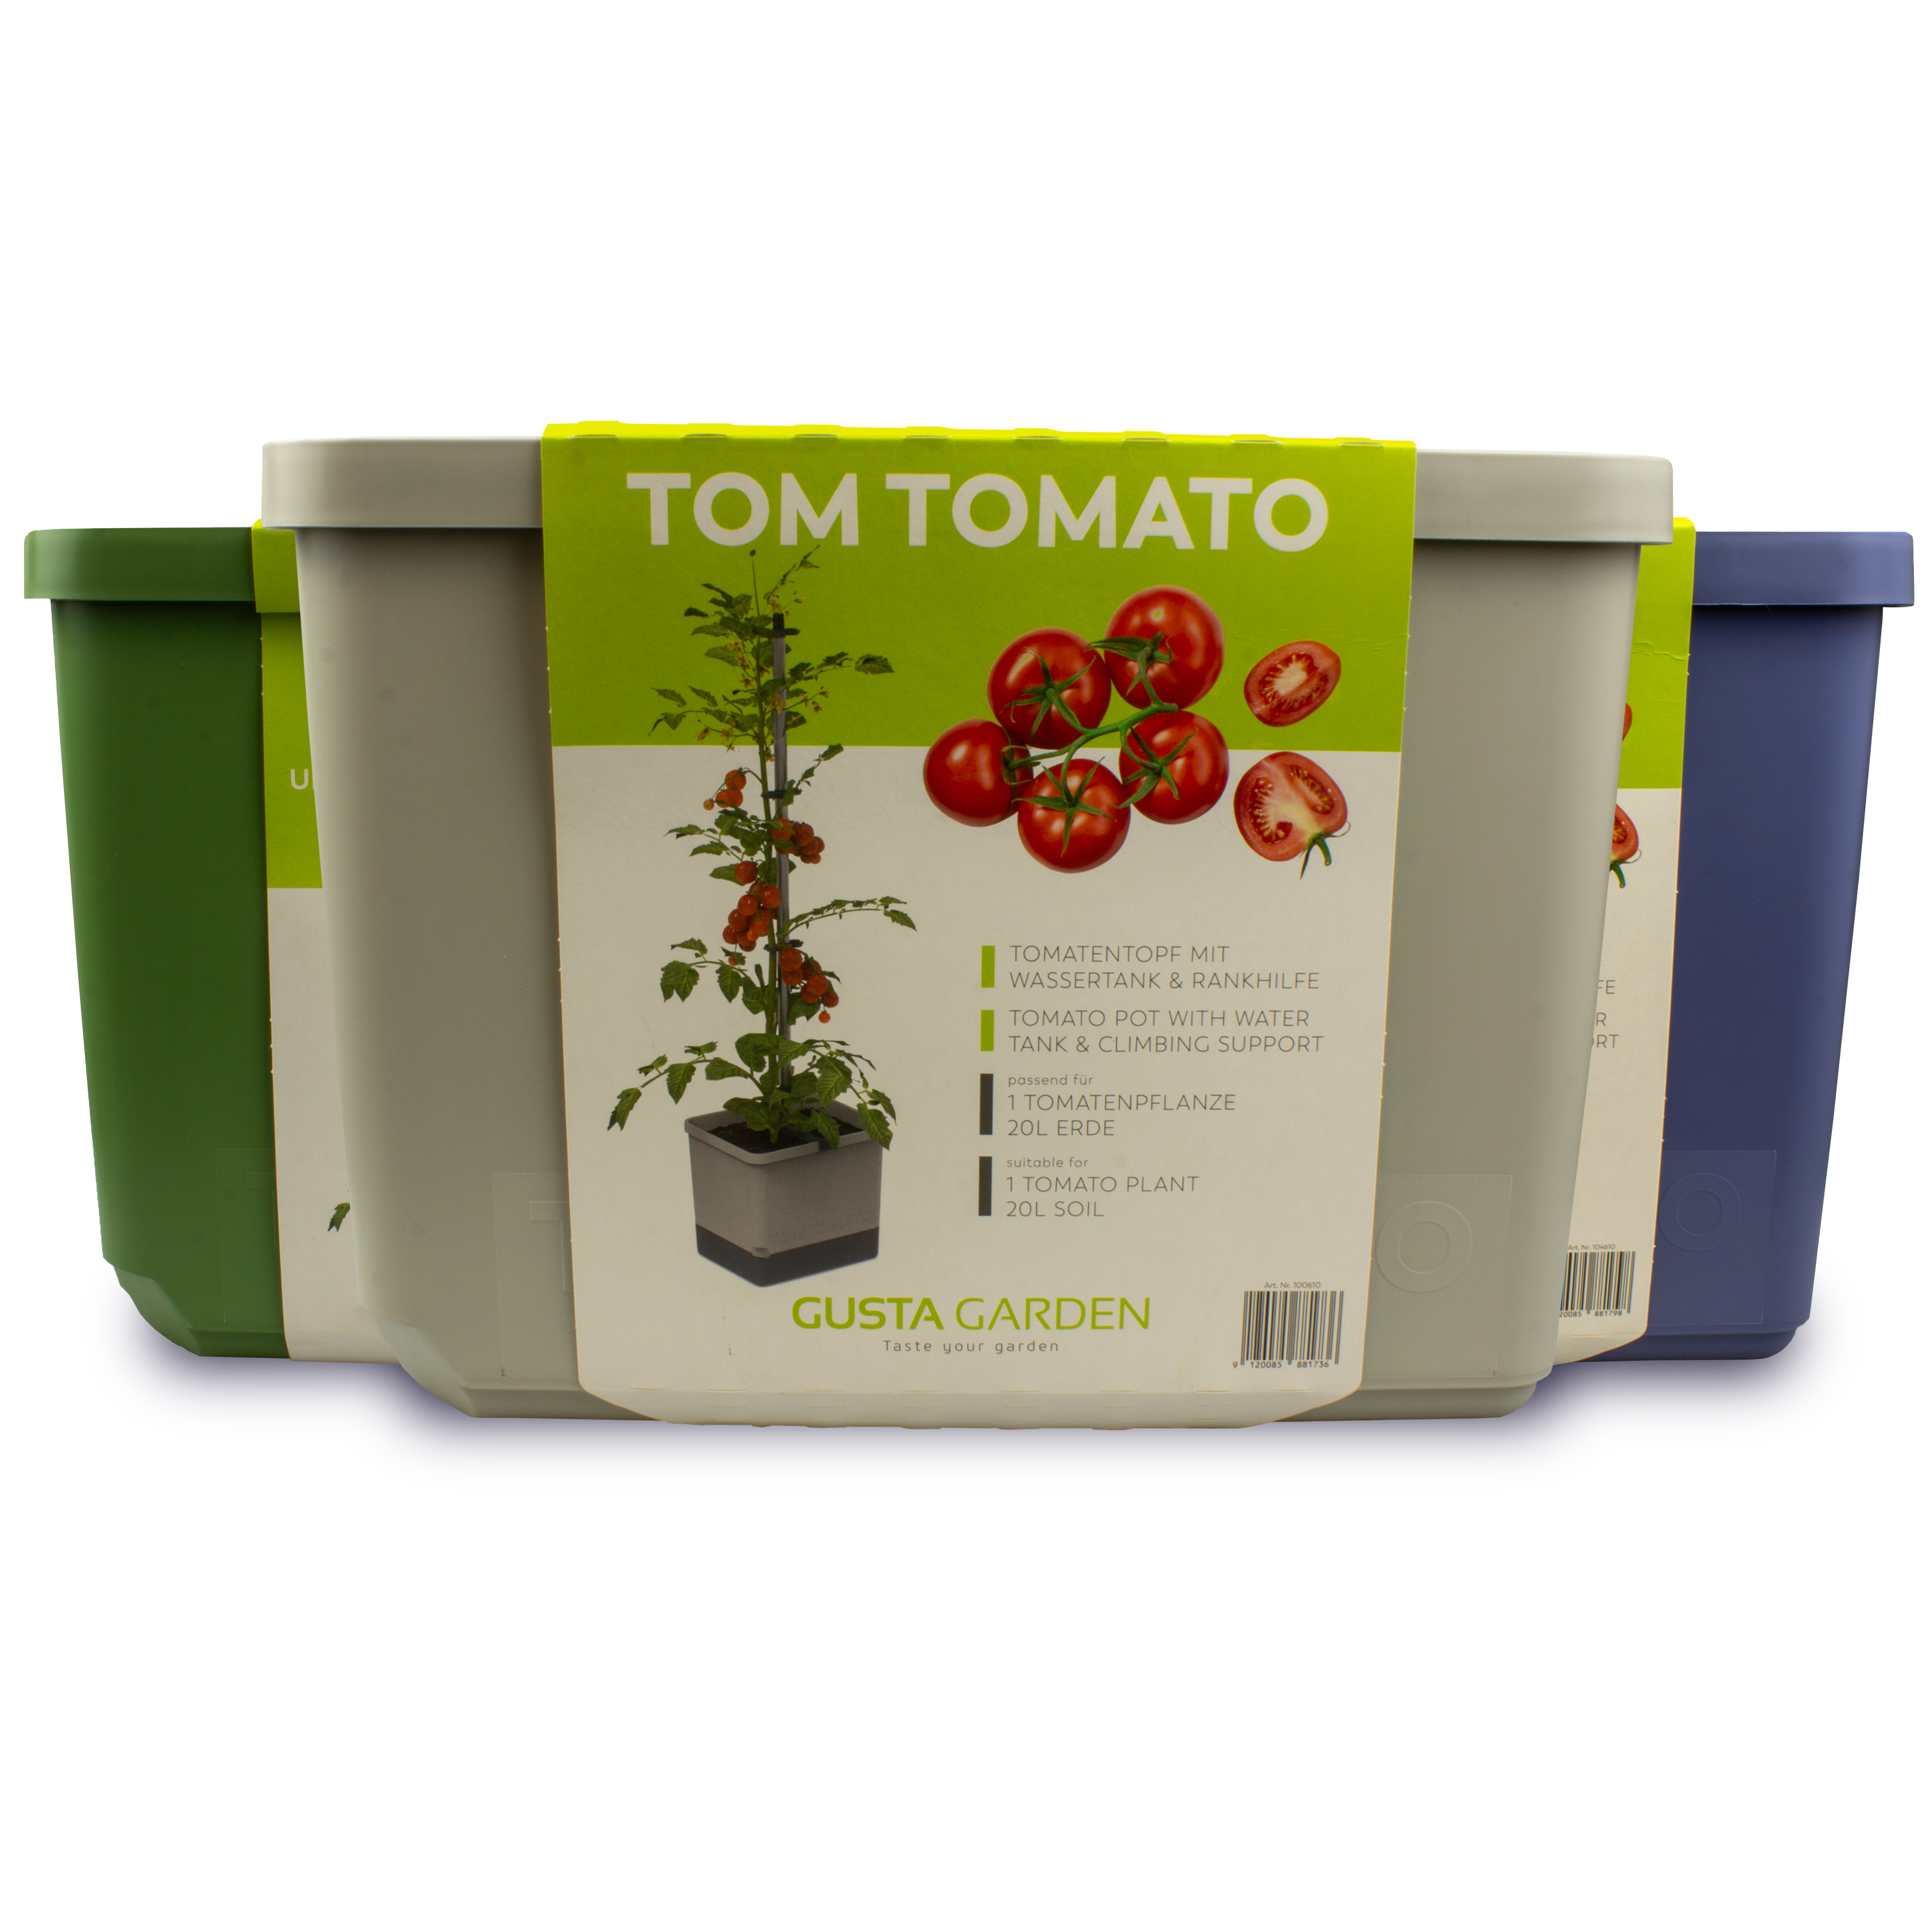 Gusta Garden TOM TOMATO Tomatentopf mit Rankhilfe, Blau